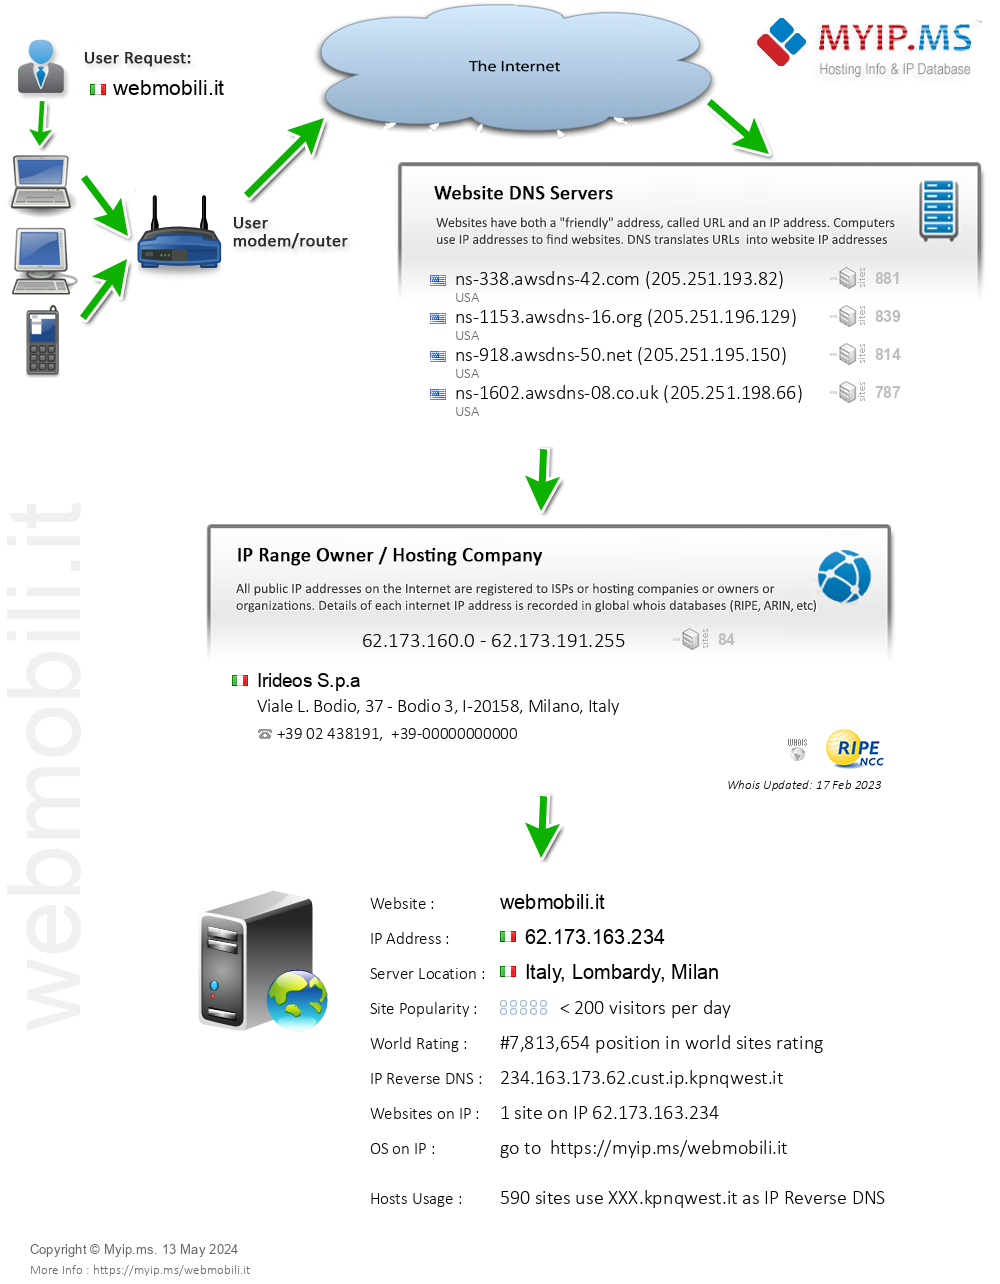 Webmobili.it - Website Hosting Visual IP Diagram